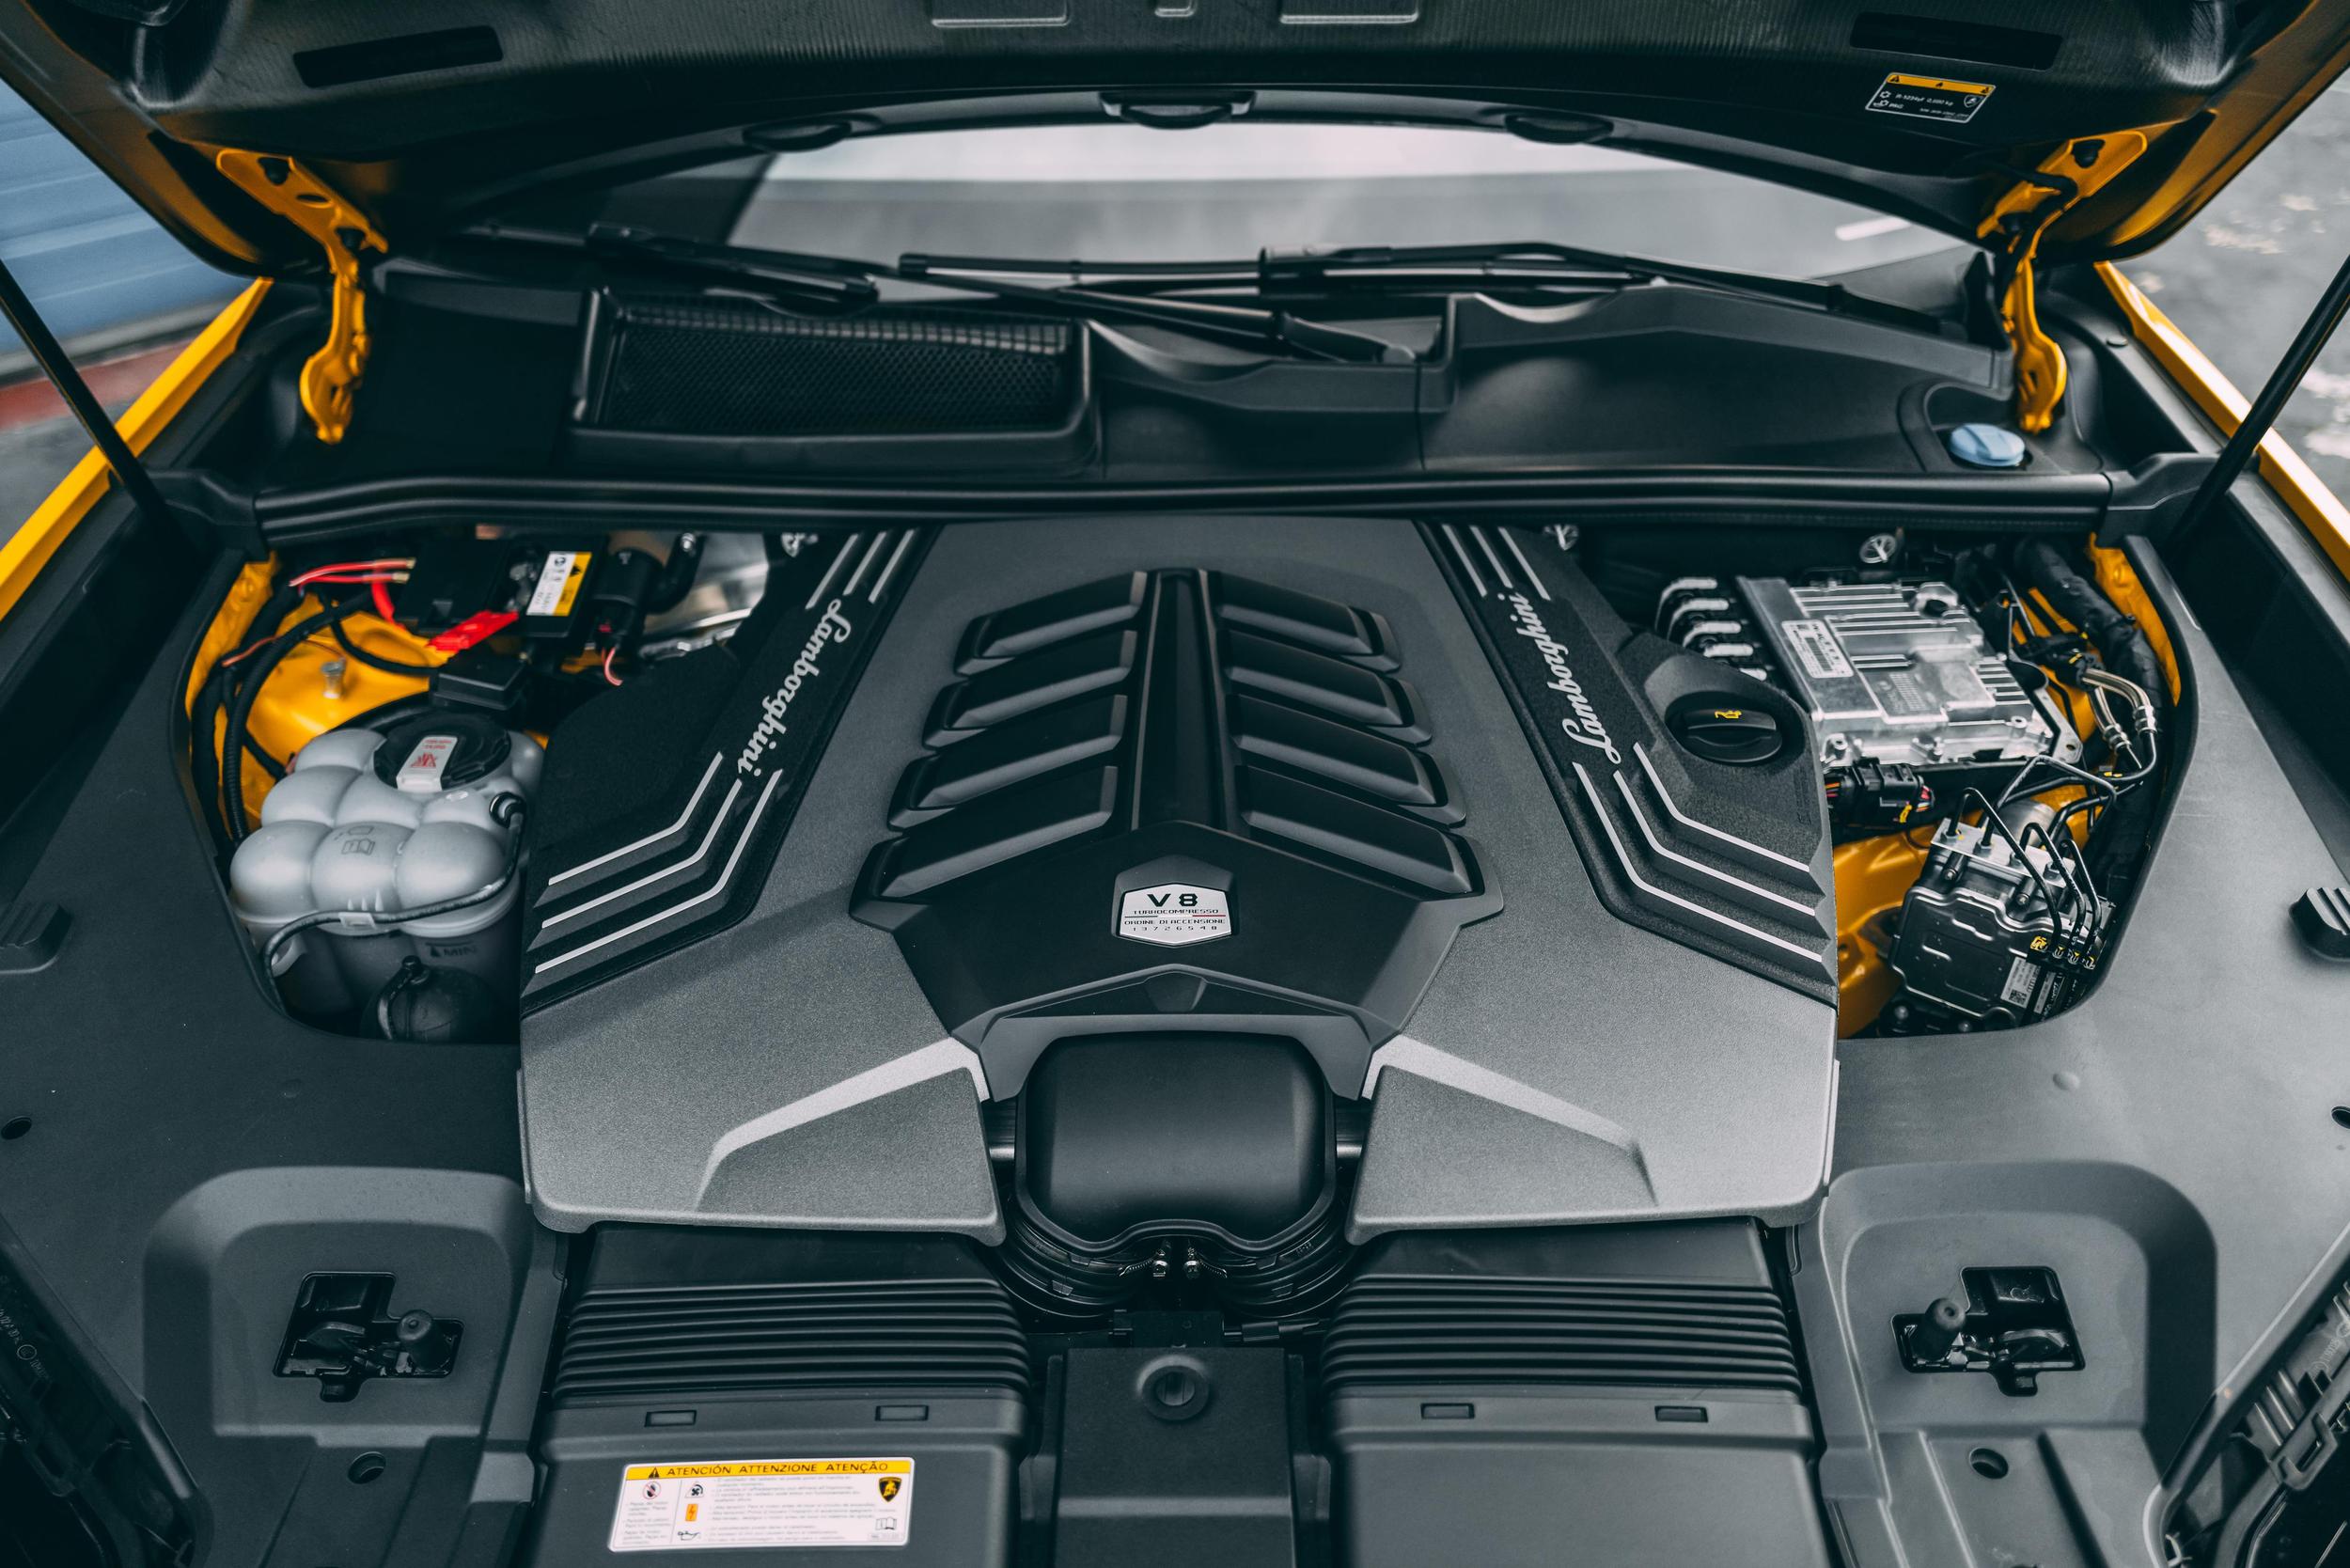 Lamborghini v8 engine: tracing the journey of a powerhouse